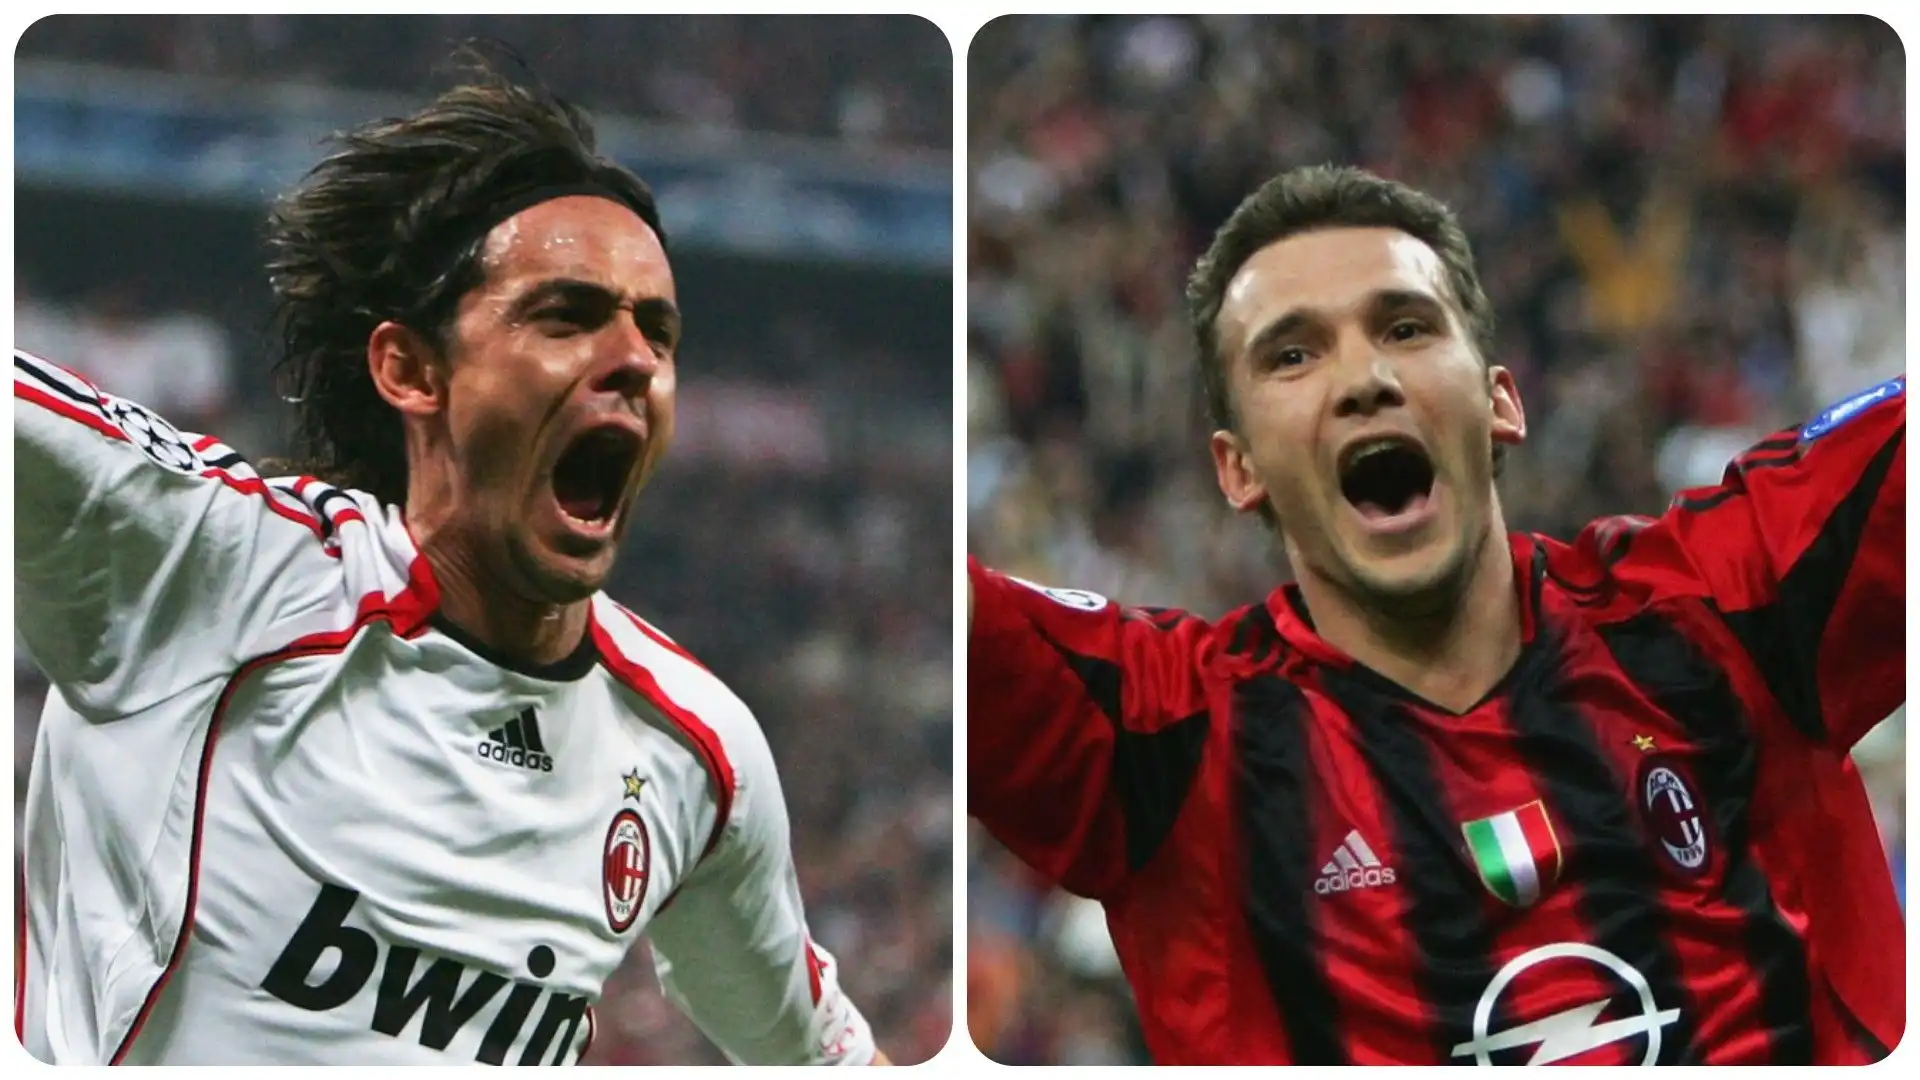 Milan: Filippo Inzaghi, 29 gol in 55 partite, e Andriy Shevchenko, 29 gol in 59 partite